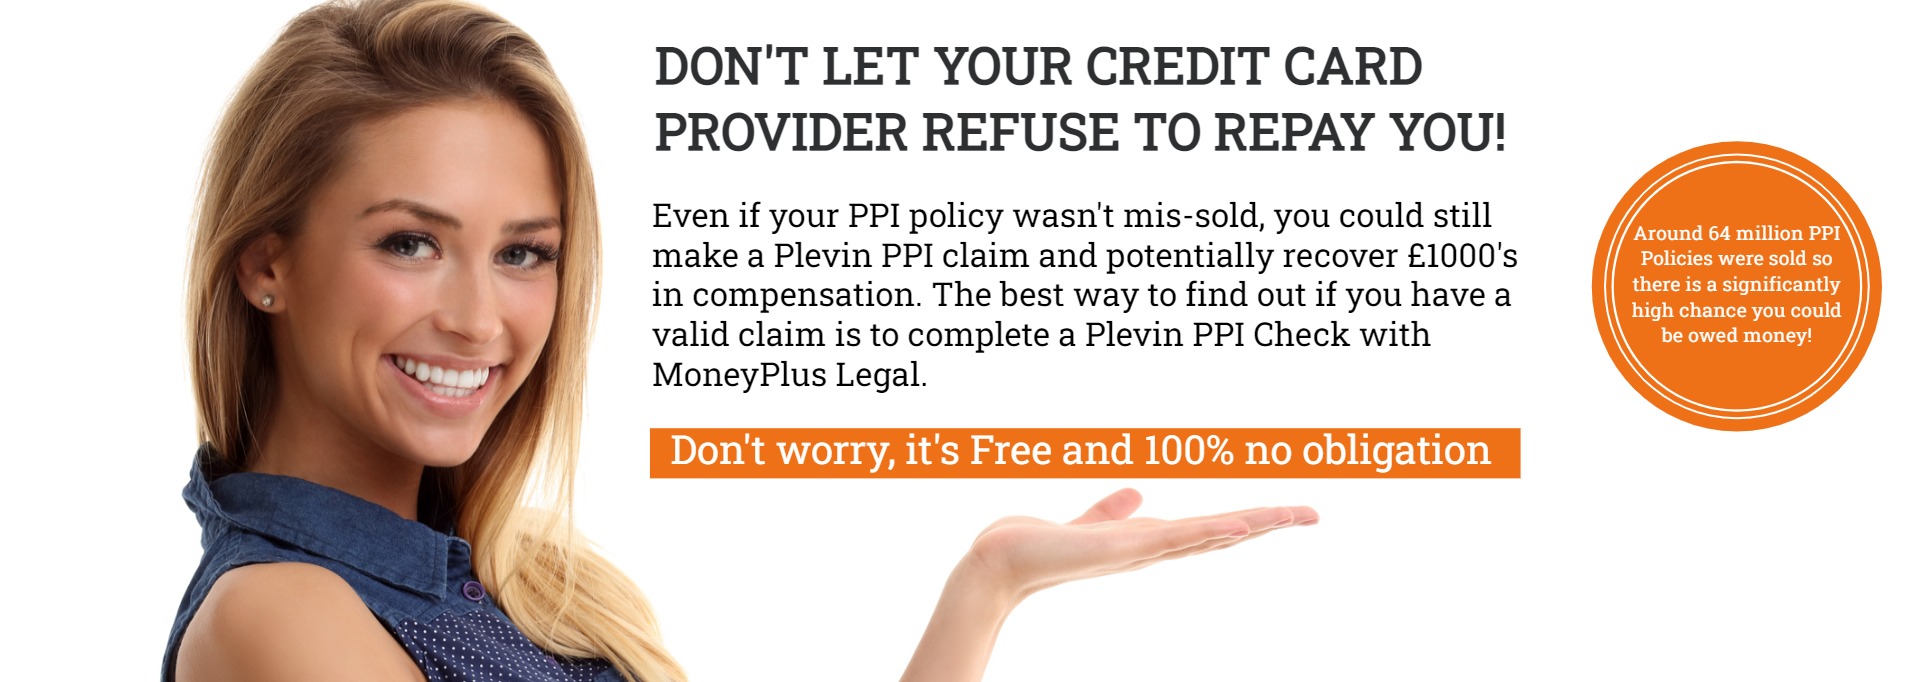 Royal Bank of Scotland Credit Card Plevin PPI Claim